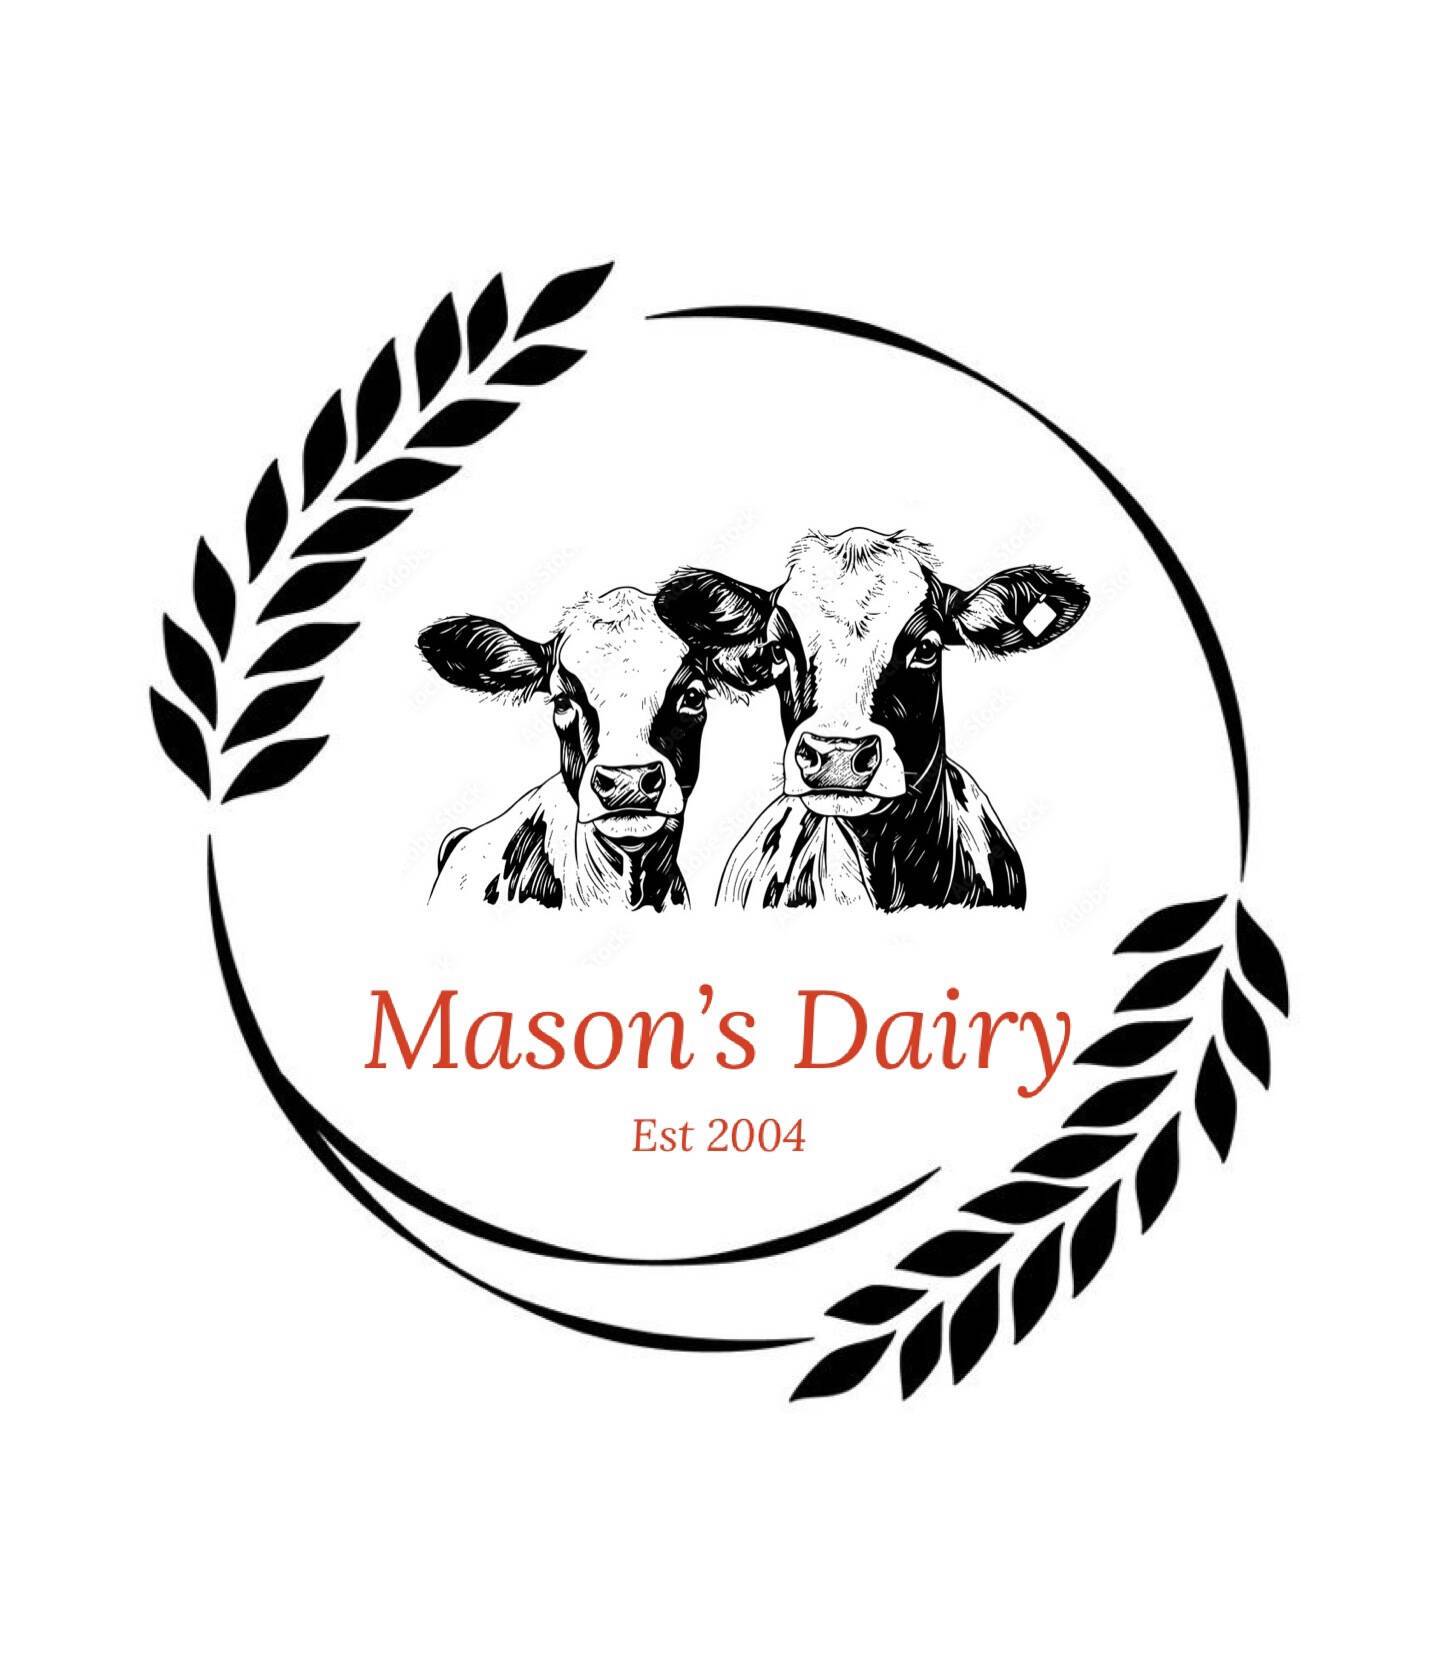 Mason's Dairy